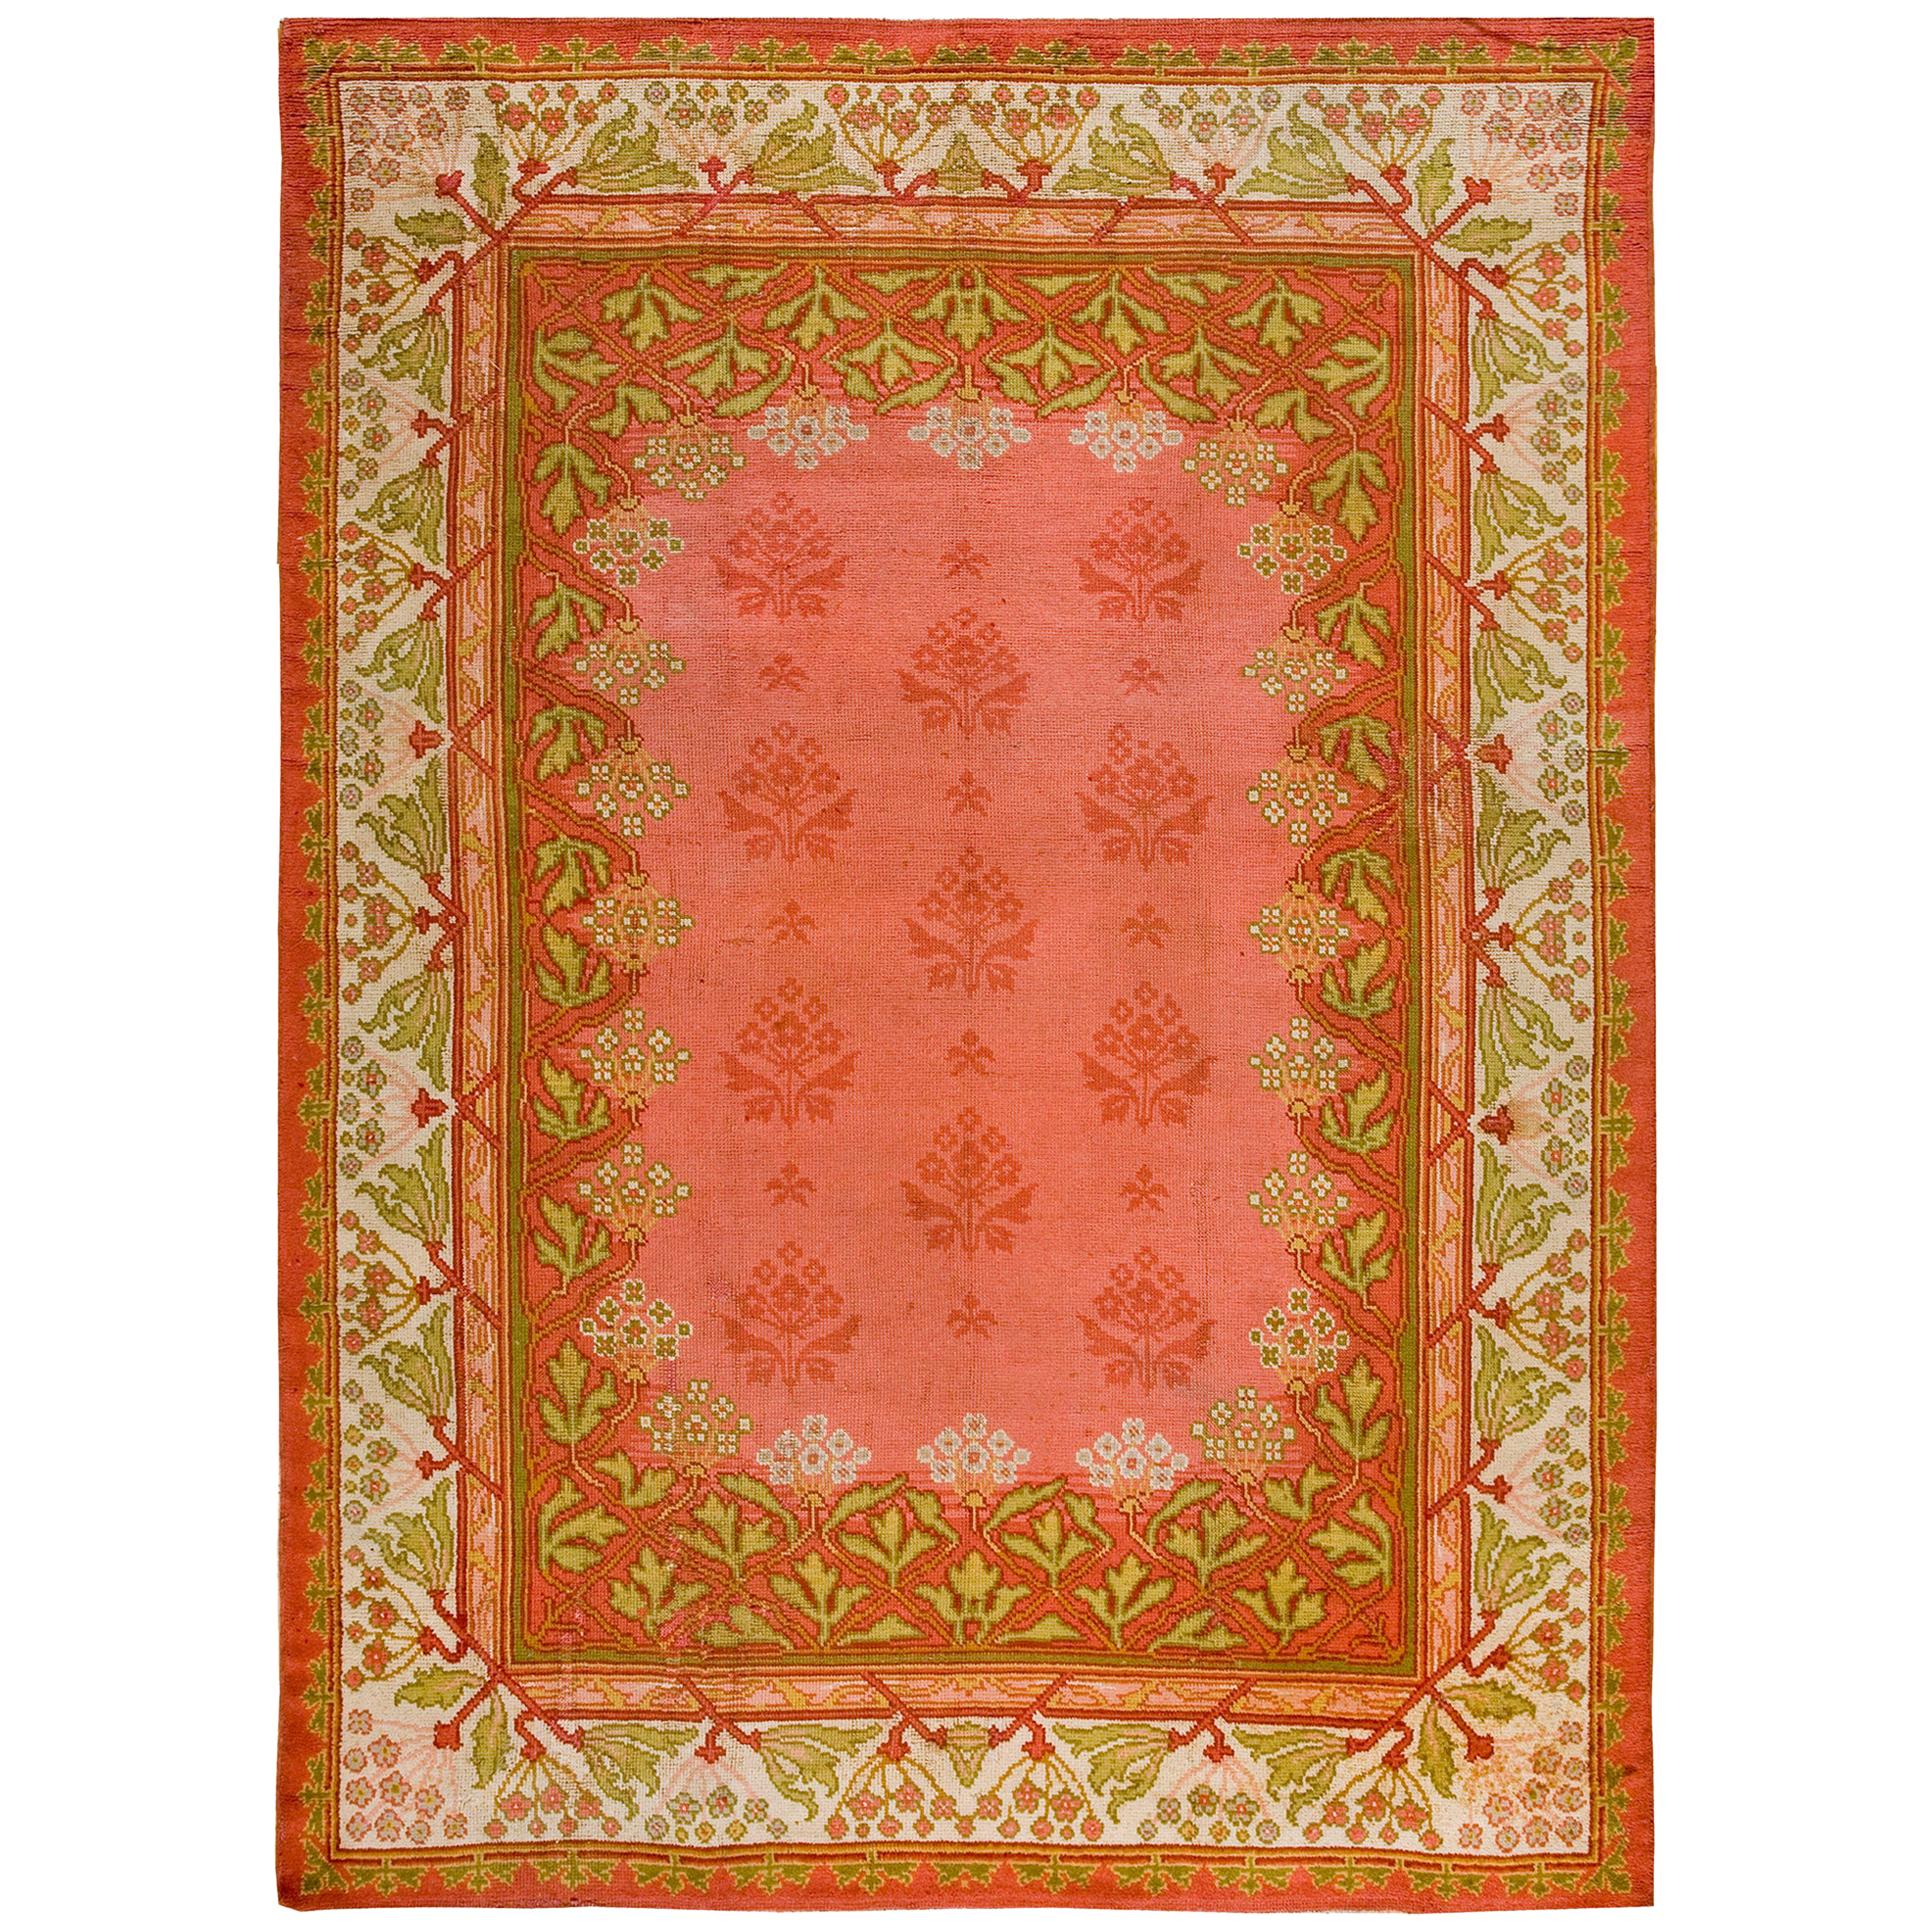 Early 20th Century Donegal Art Nouveau Carpet ( 9'1" x 12'6" - 277 x 382 ) For Sale